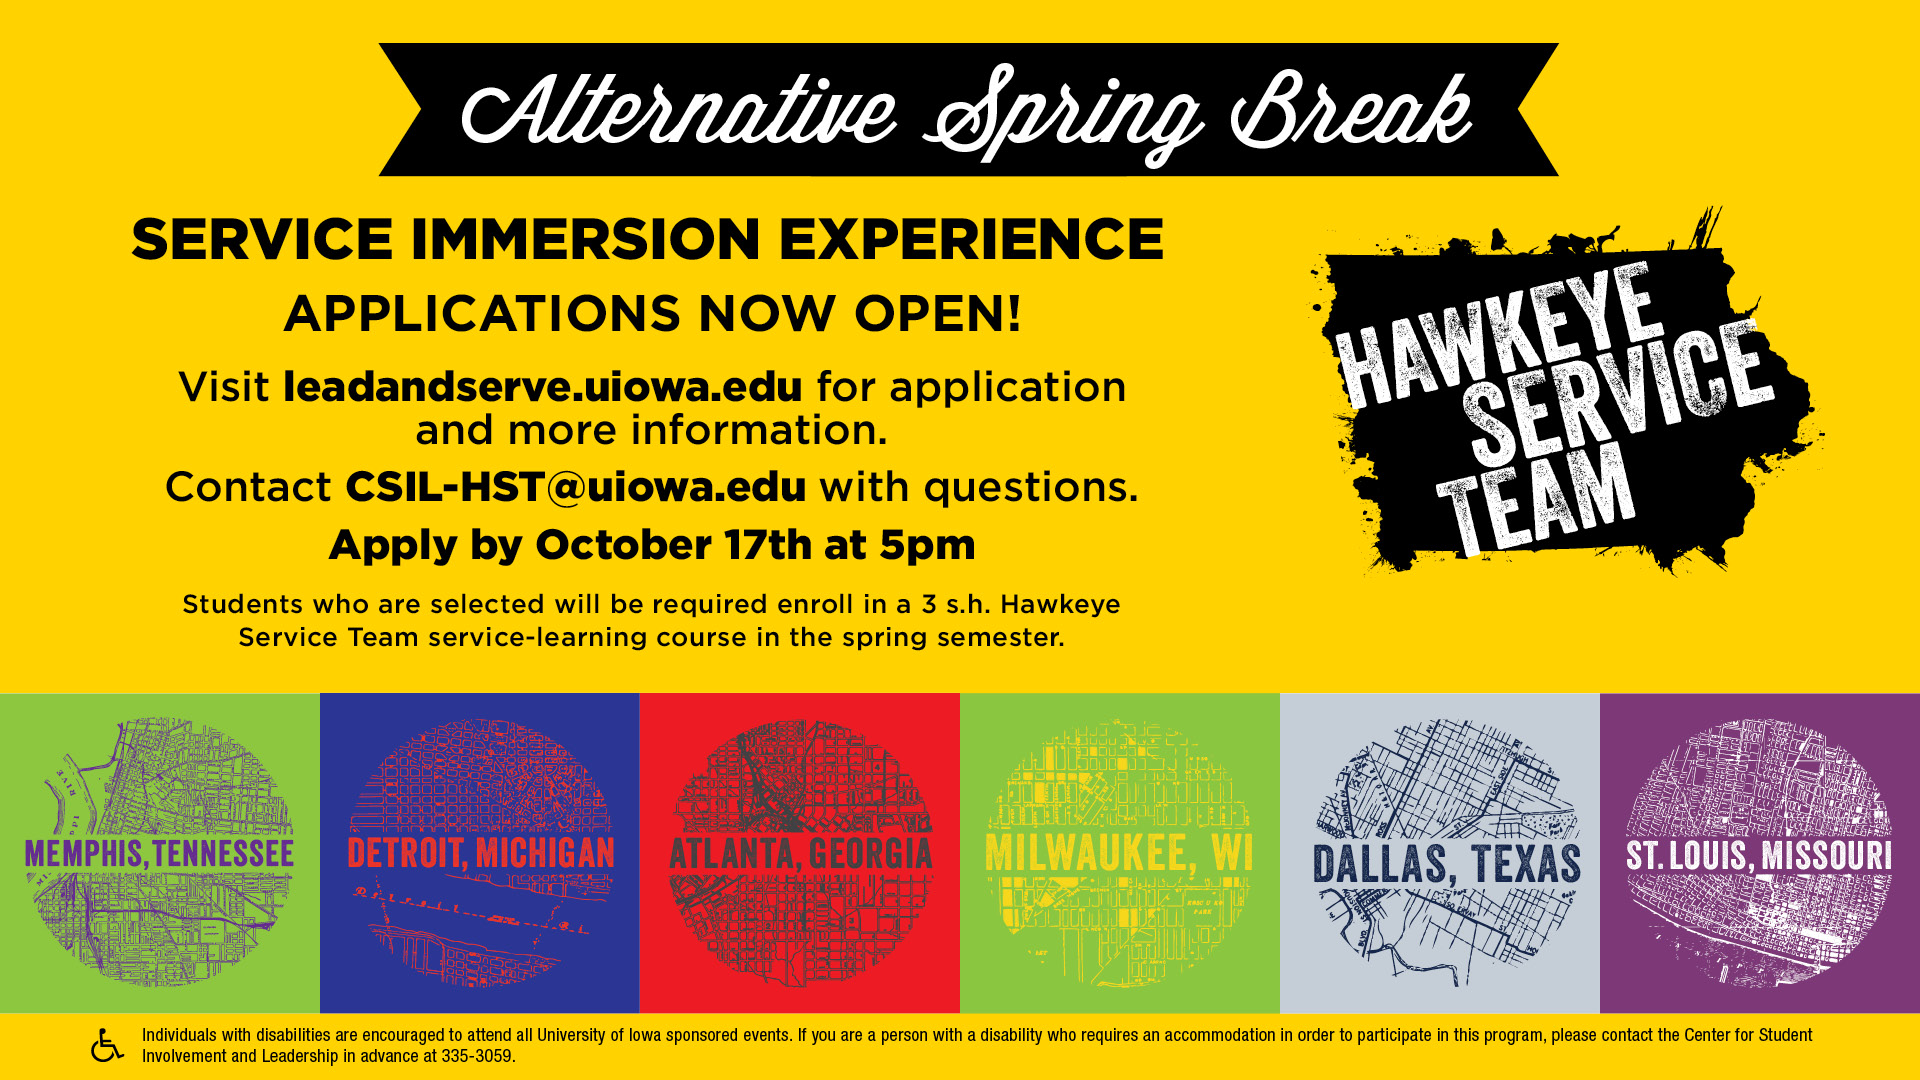 Alternative Spring Break 2019 Applications Open until October 17th at 5pm